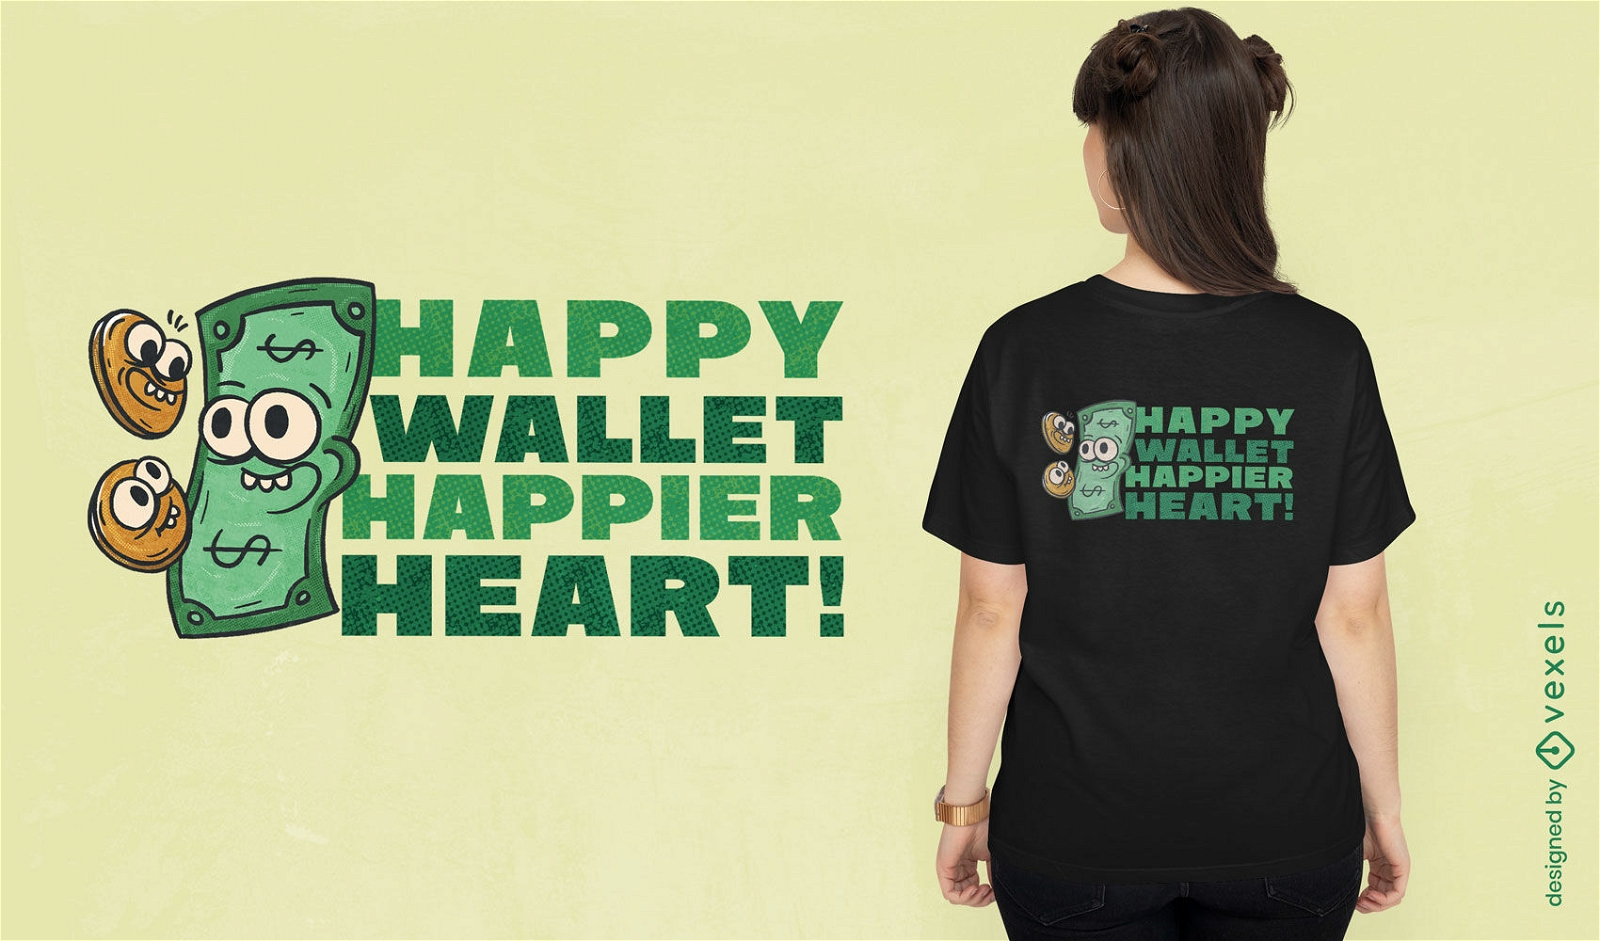 Dise?o de camiseta de personajes de billetera feliz.